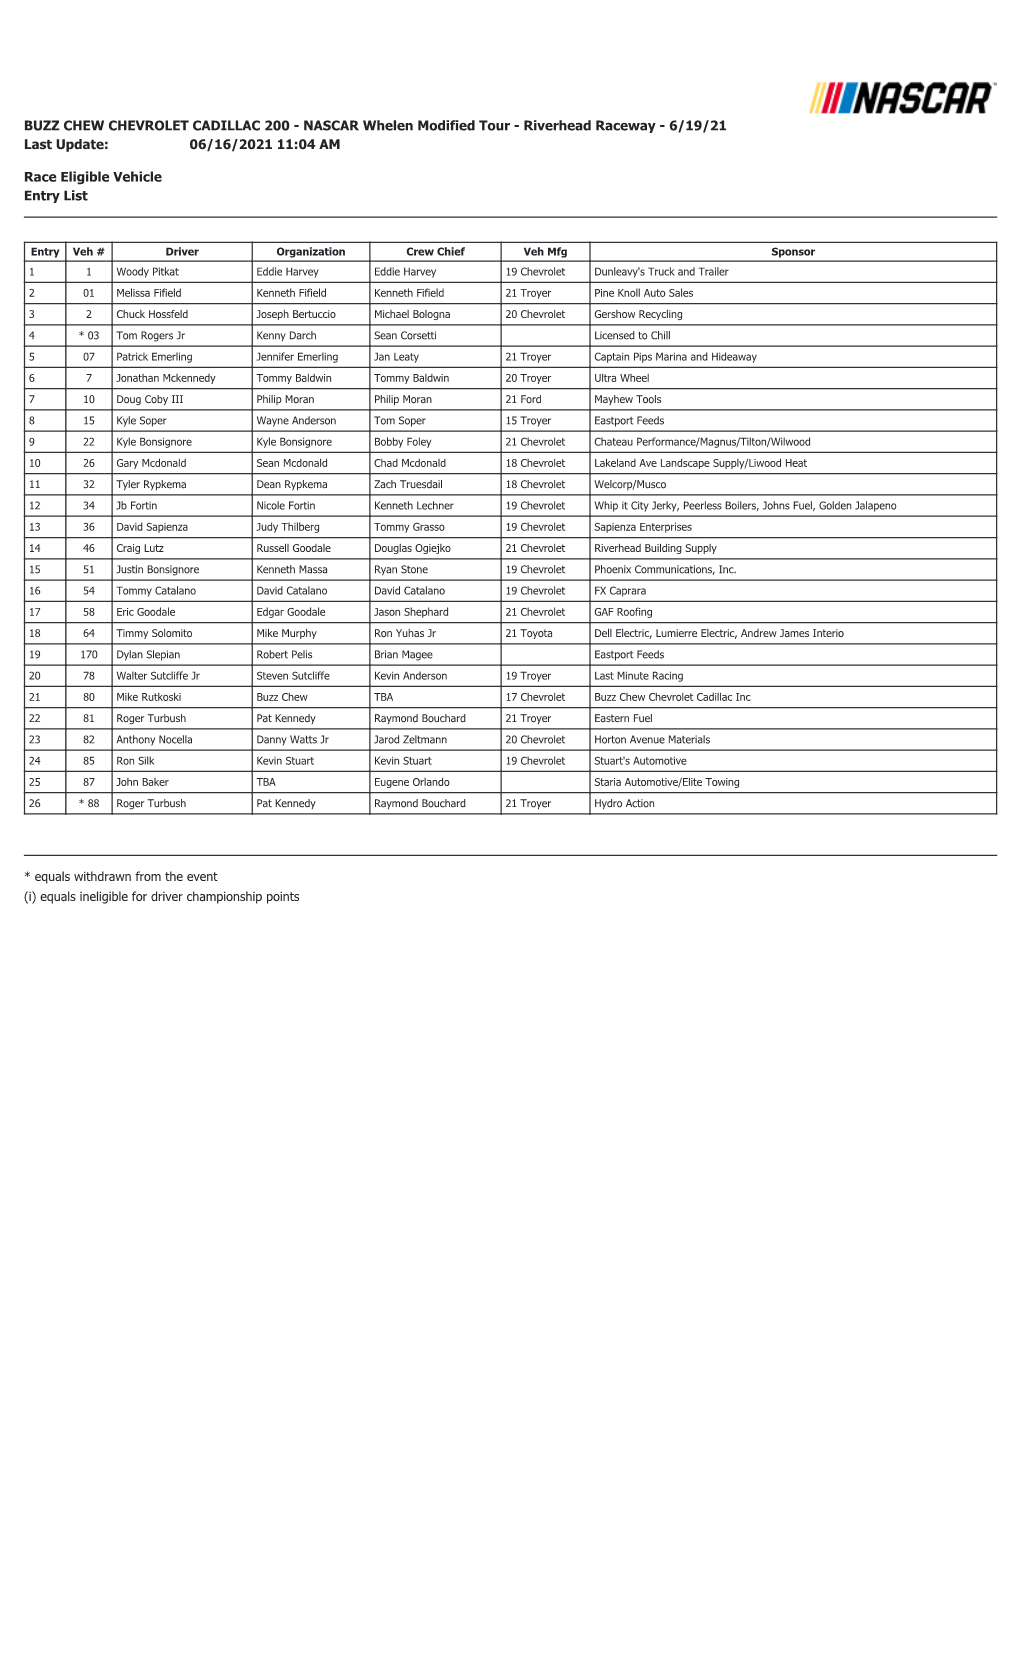 BUZZ CHEW CHEVROLET CADILLAC 200 - NASCAR Whelen Modified Tour - Riverhead Raceway - 6/19/21 Last Update: 06/16/2021 11:04 AM